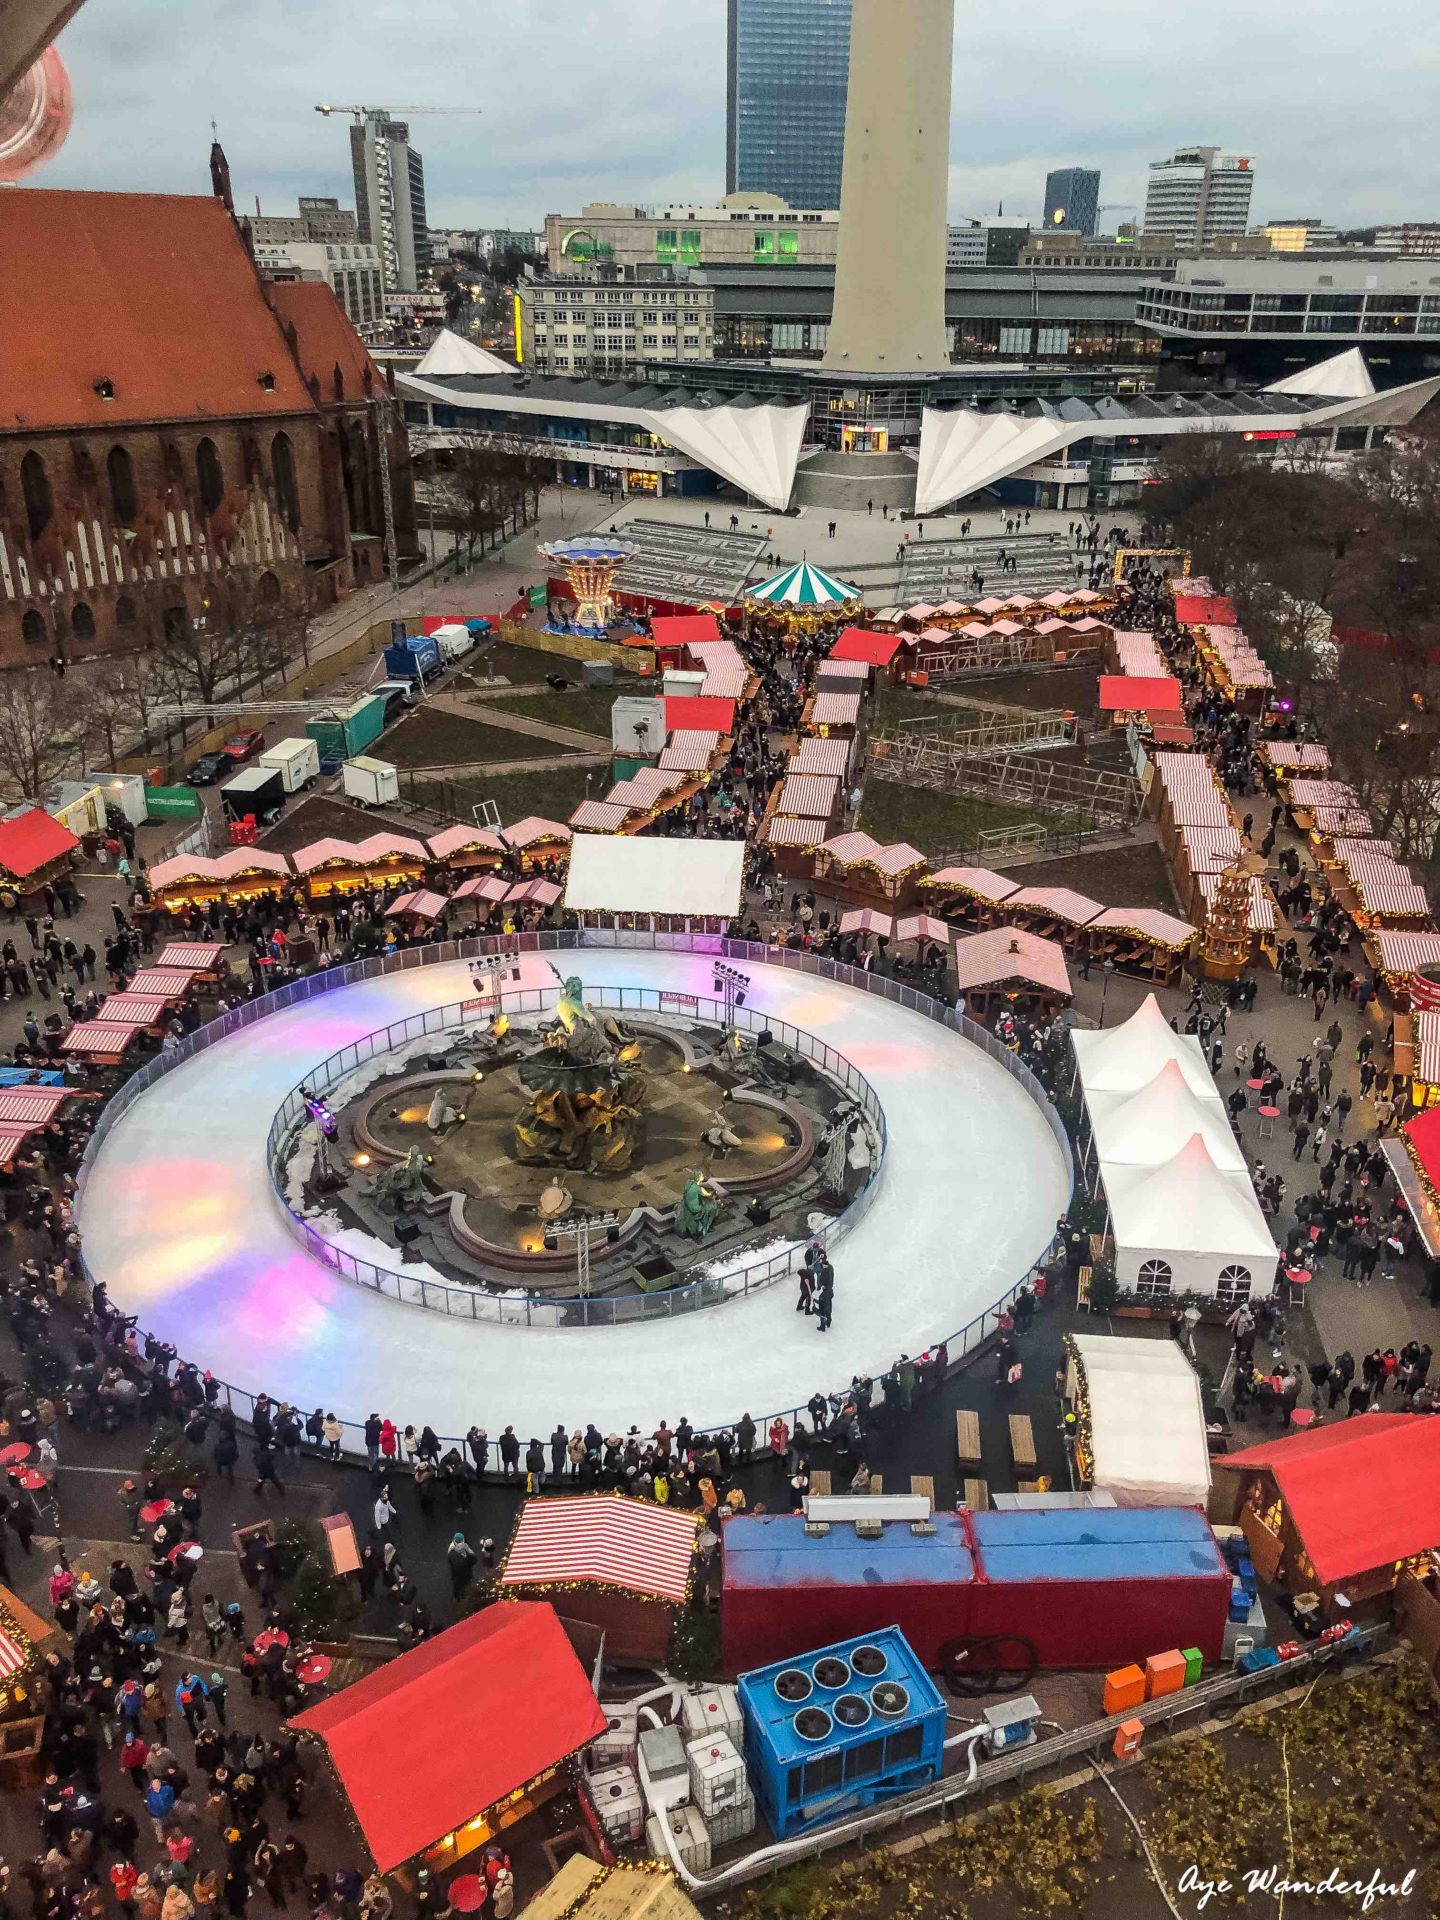 Aerial view of the Alexanderplatz Christmas market